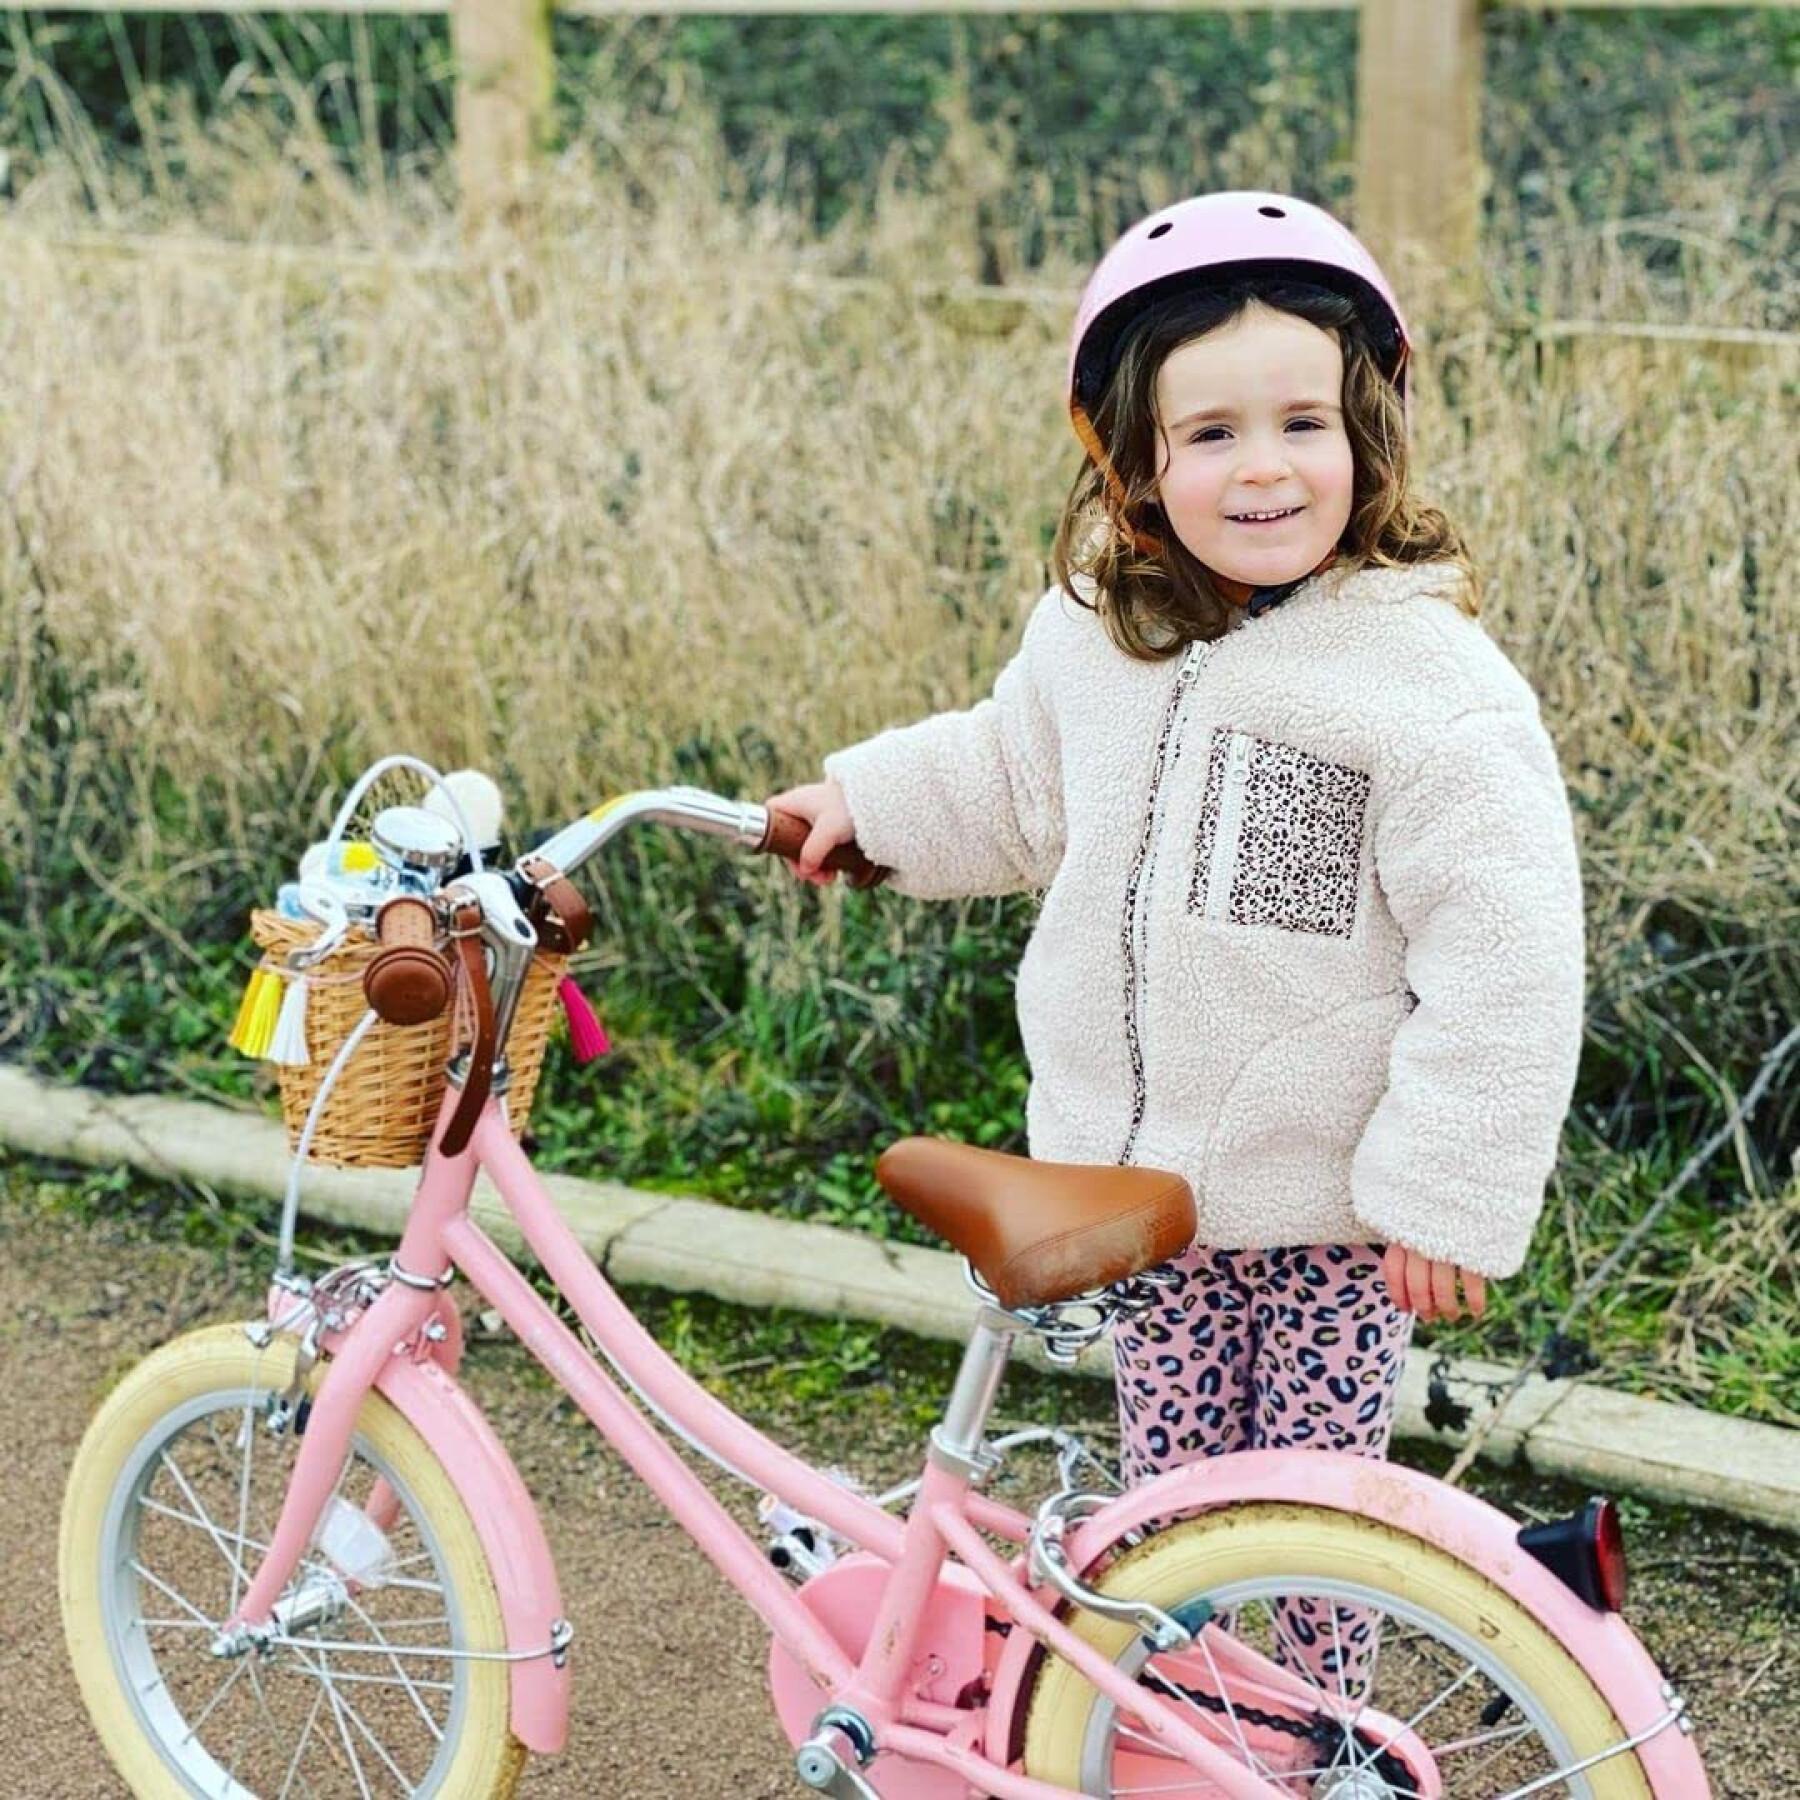 Bicicleta para niños Bobbin Bikes Gingersnap